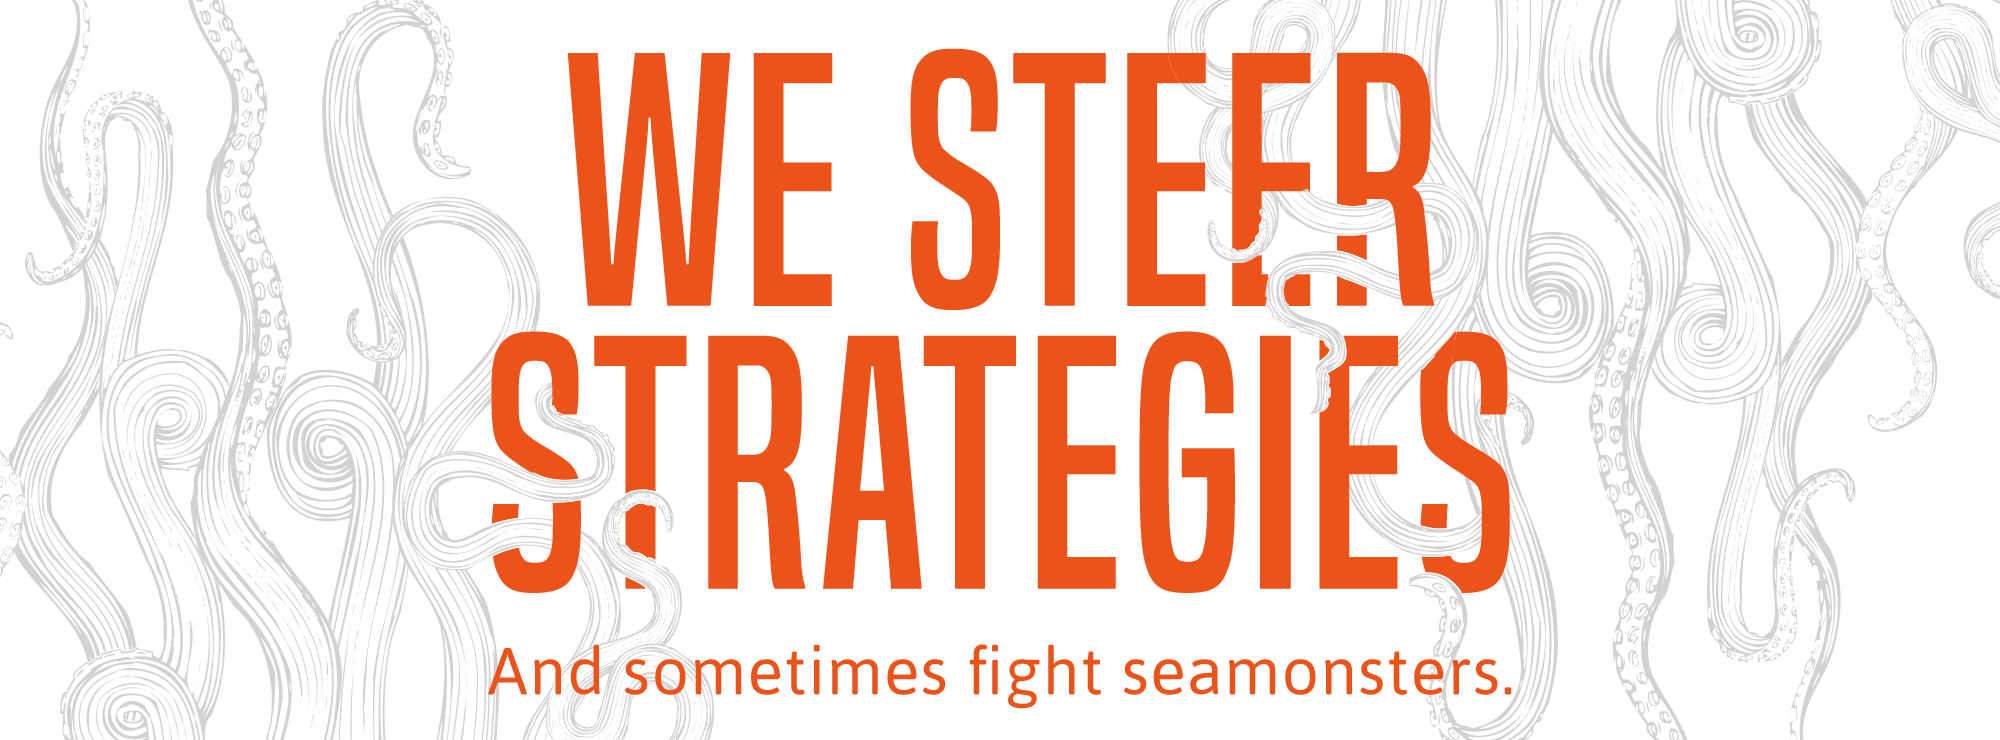 We Steer Strategies. And sometimes fight seamonsters.